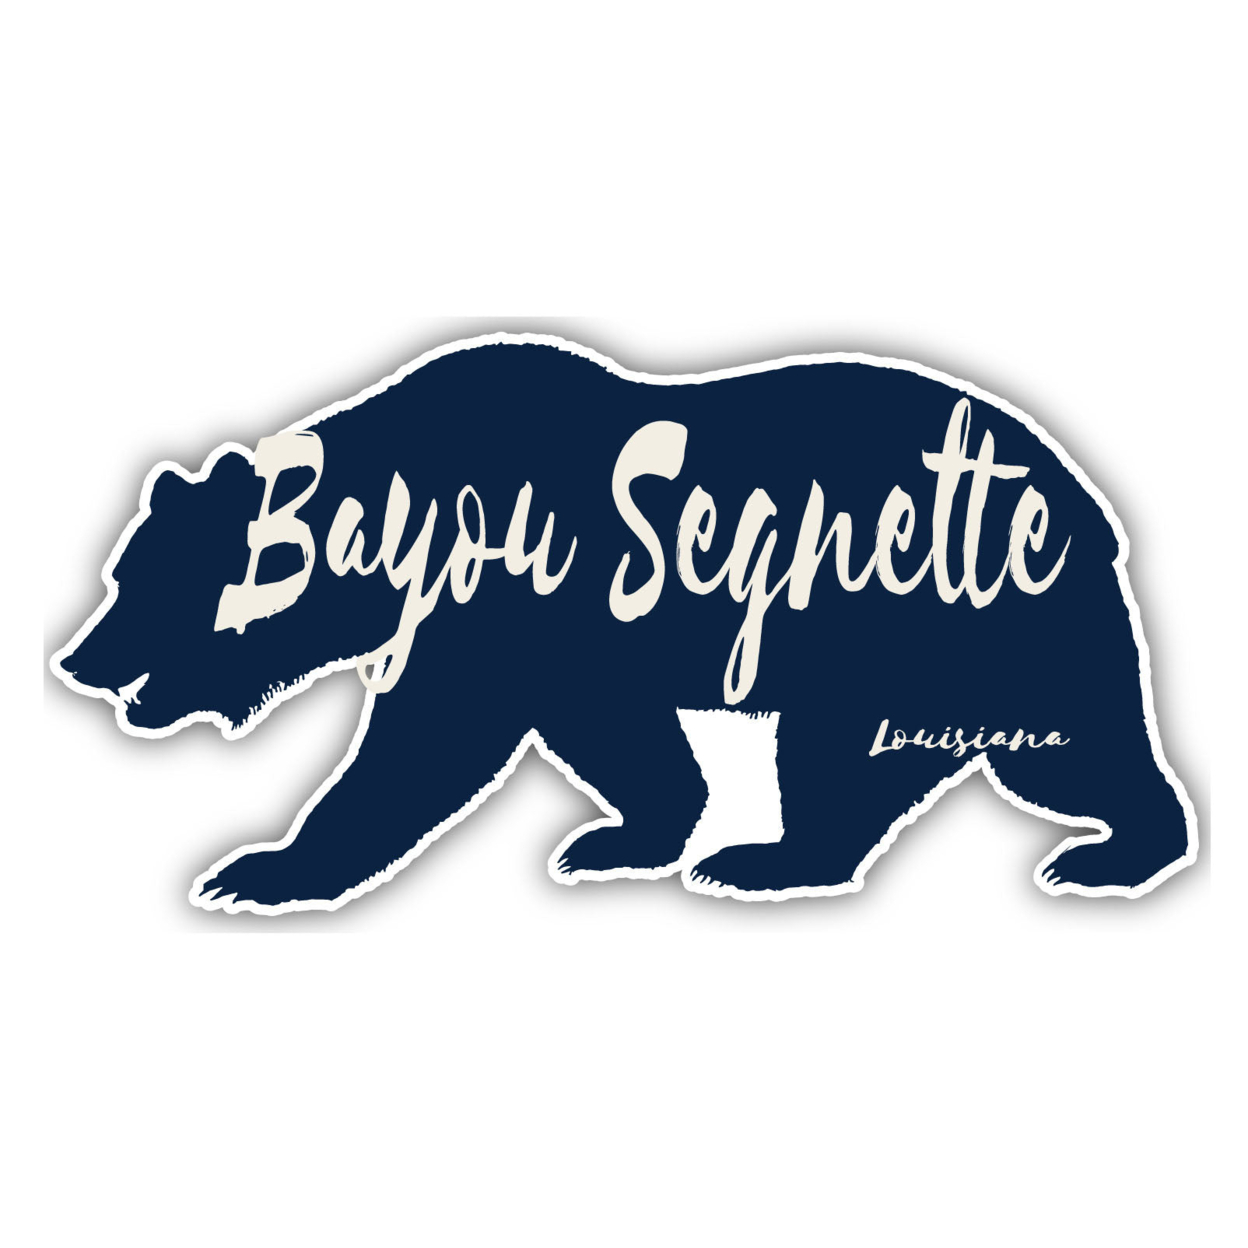 Bayou Segnette Louisiana Souvenir Decorative Stickers (Choose Theme And Size) - 4-Pack, 4-Inch, Bear